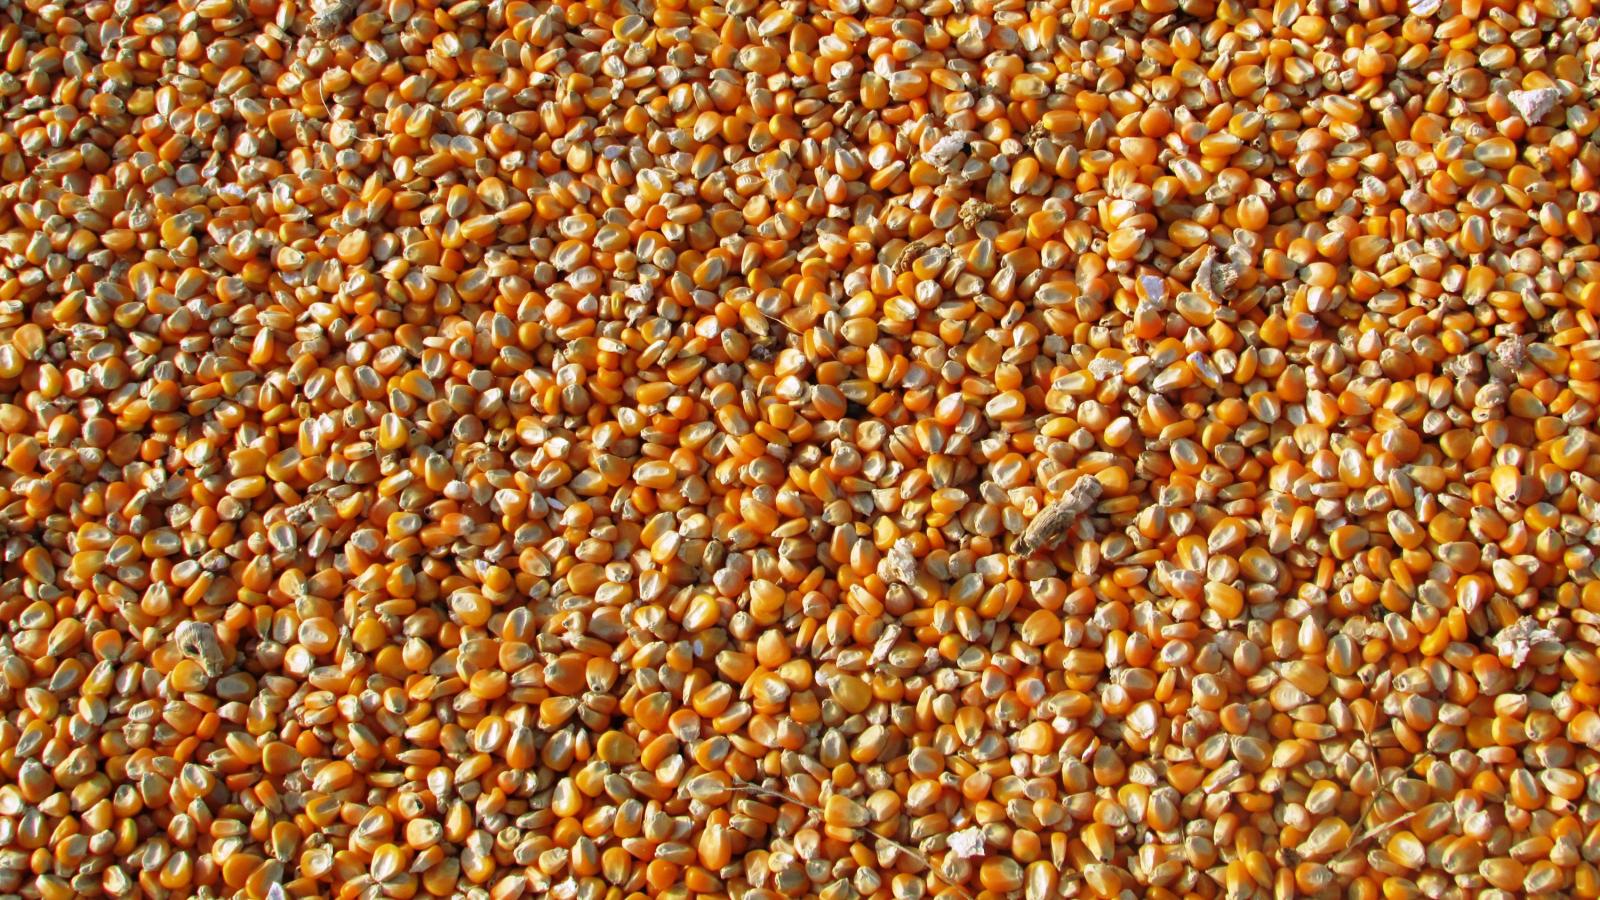 Kernals of corn